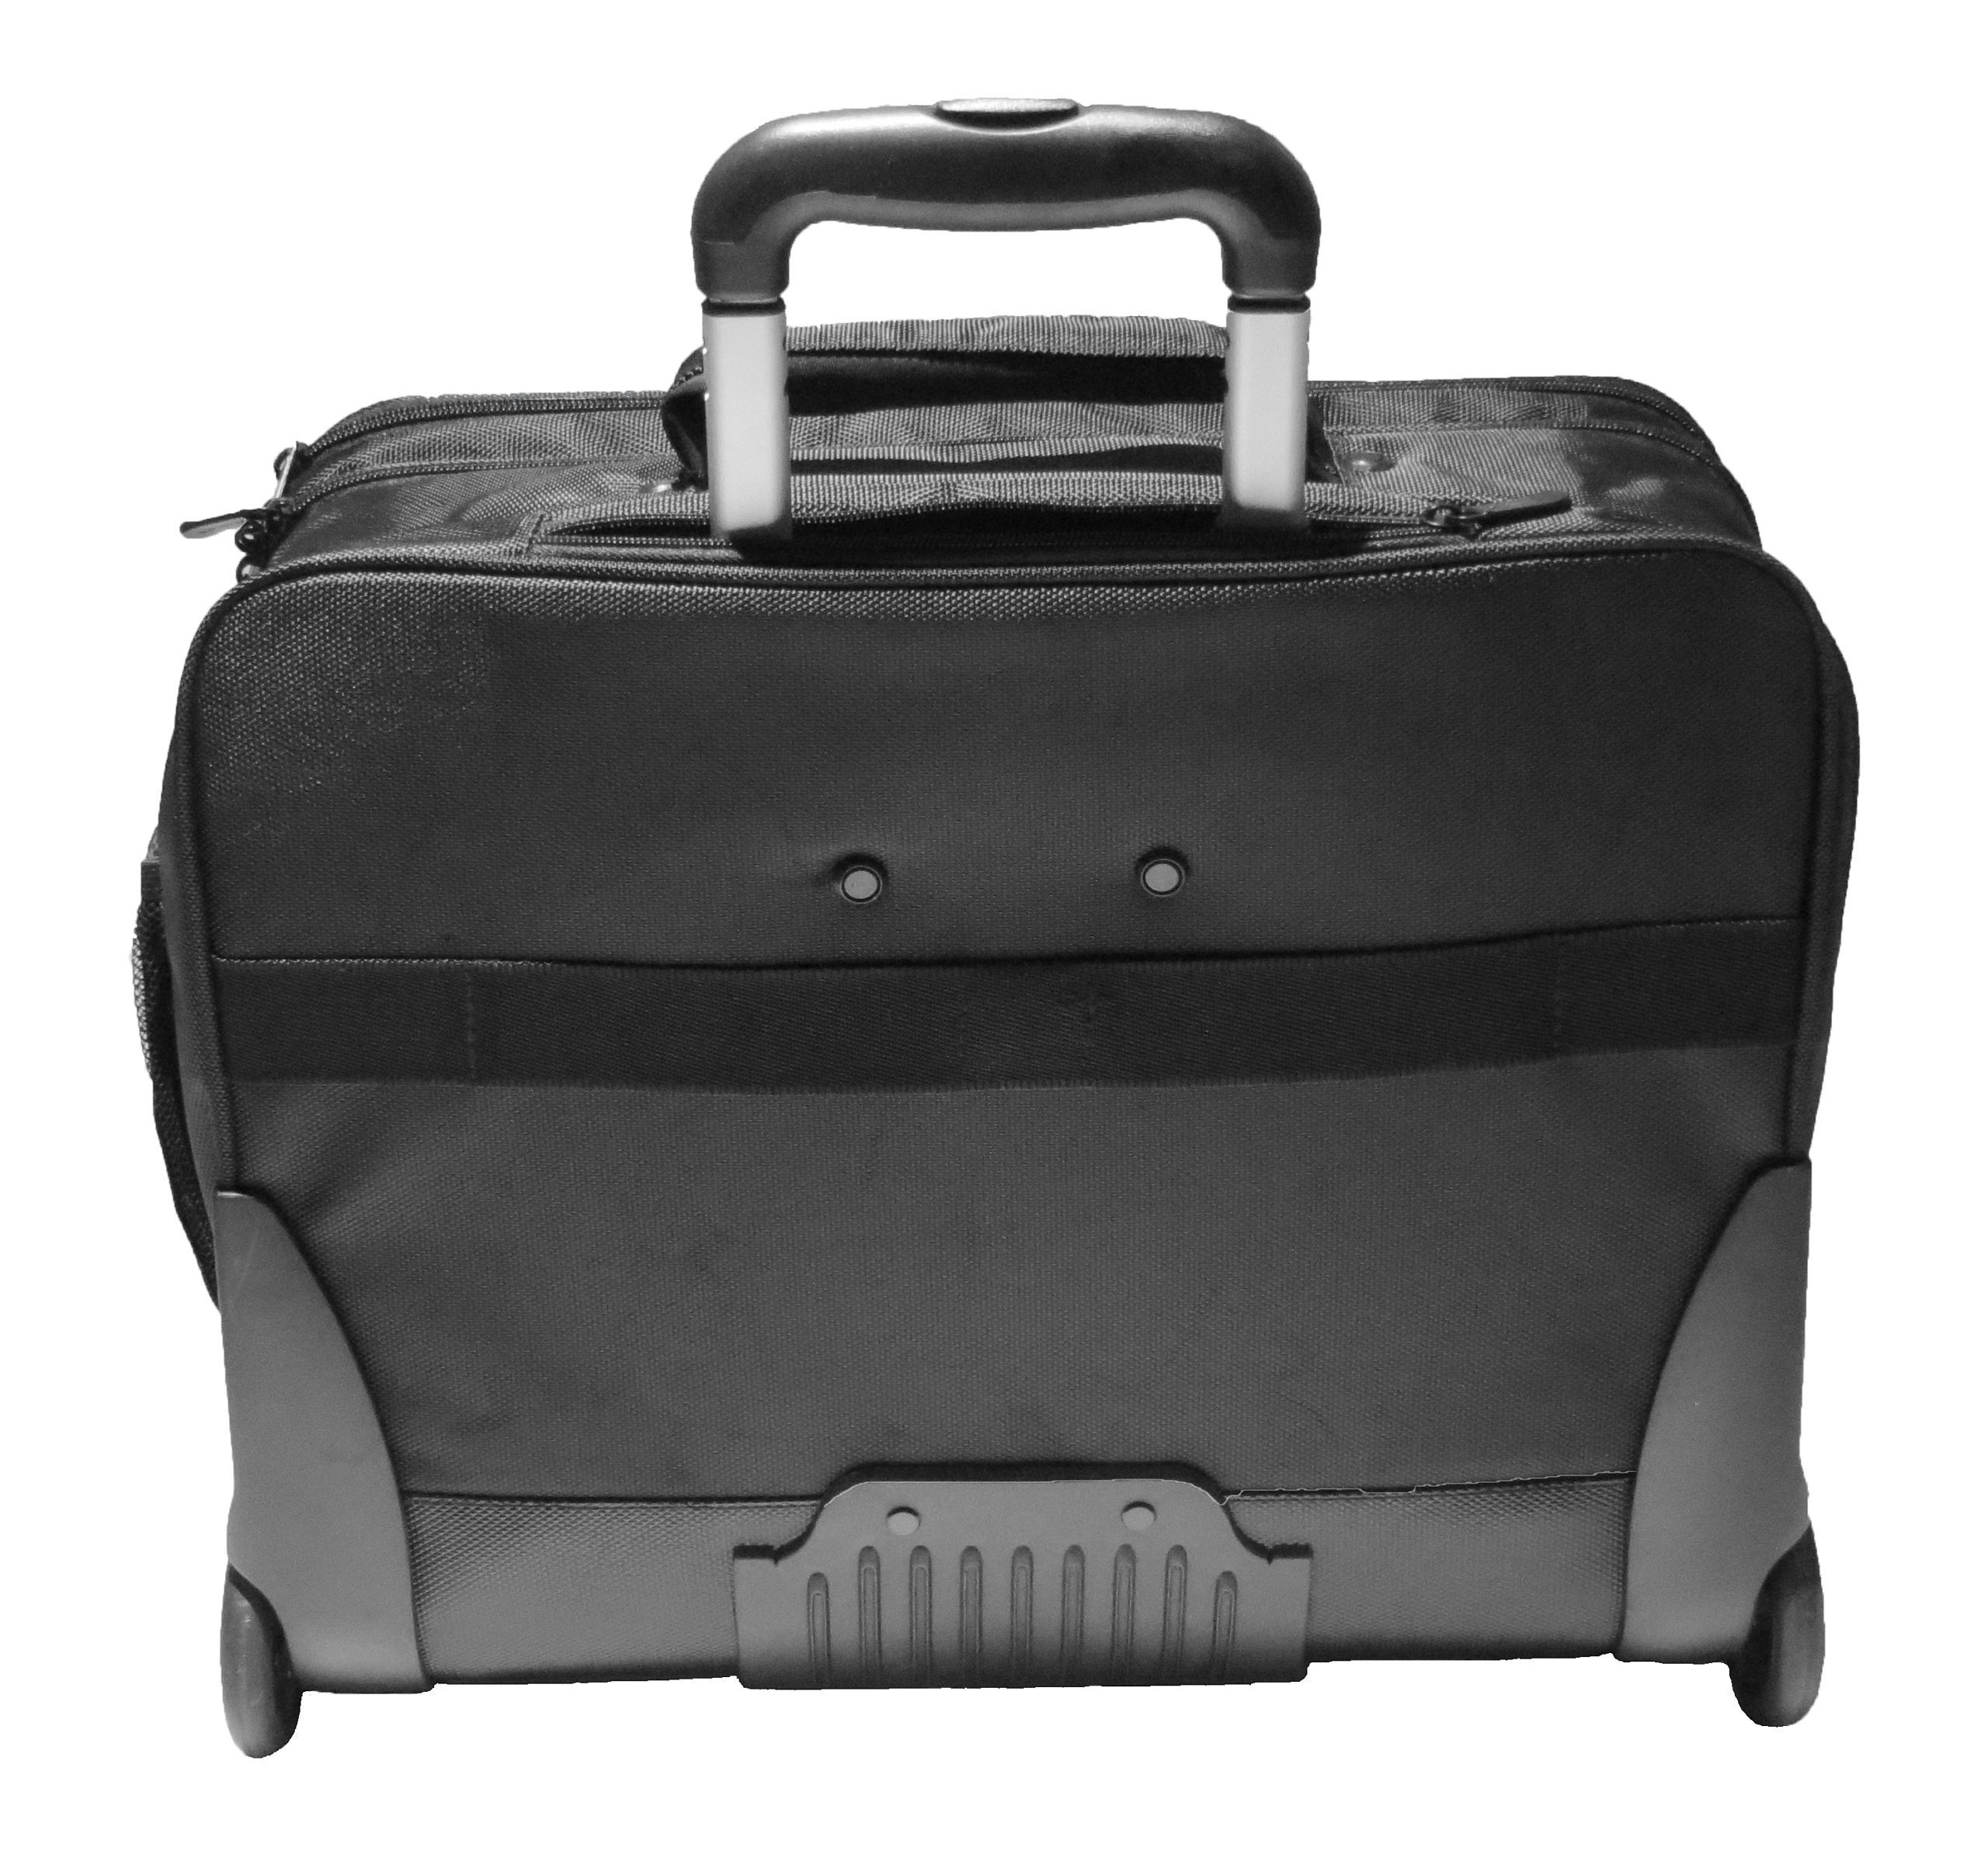 Dermata Business-Trolley cm - 30 [41 2 Laptop-Trolley, cm] x schwarz, Zoll Rollen, Organizer 17